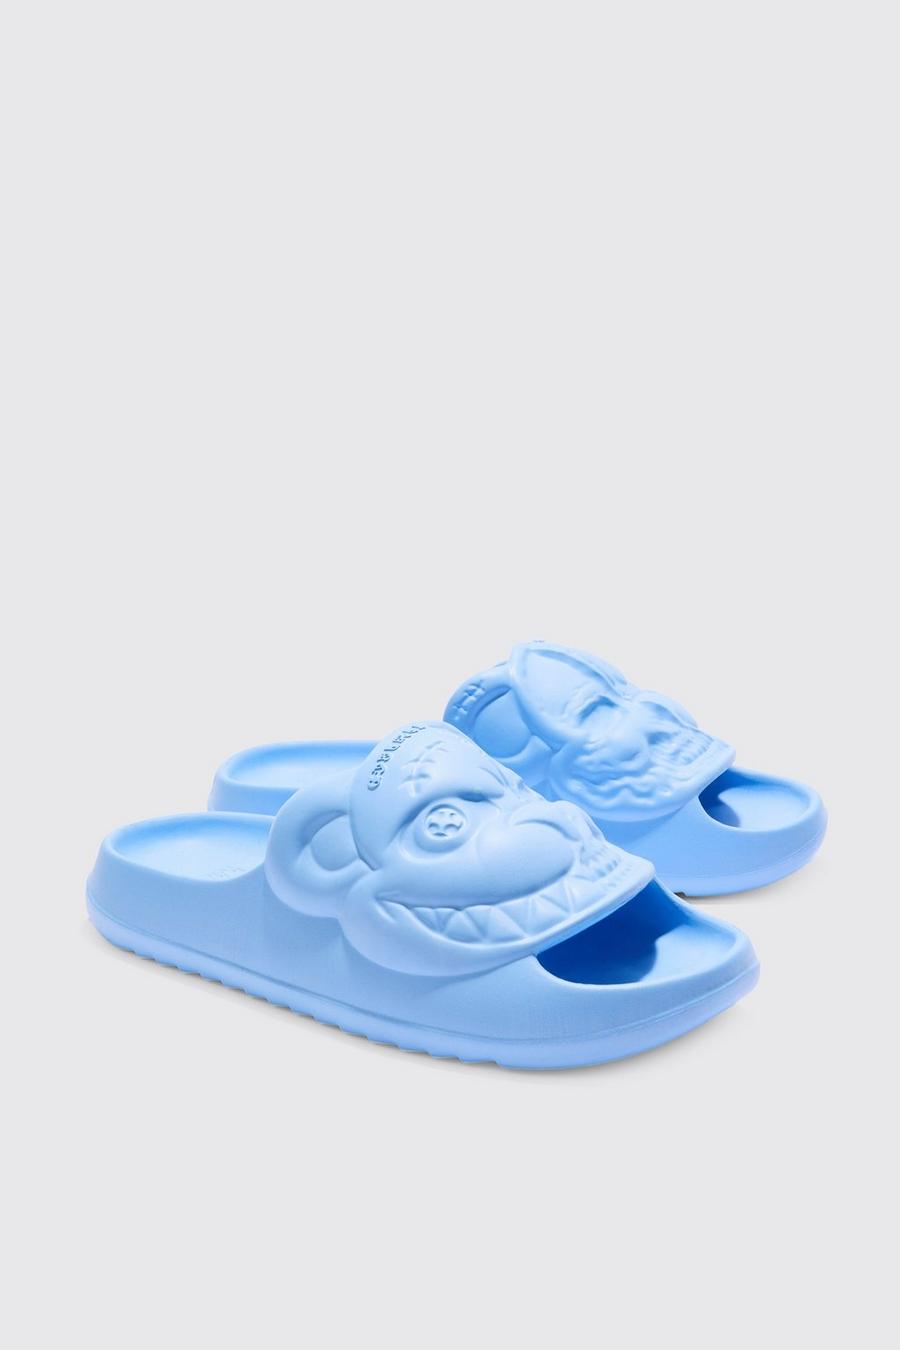 Light blue Vans x Supreme Sk8-Hi sneakers